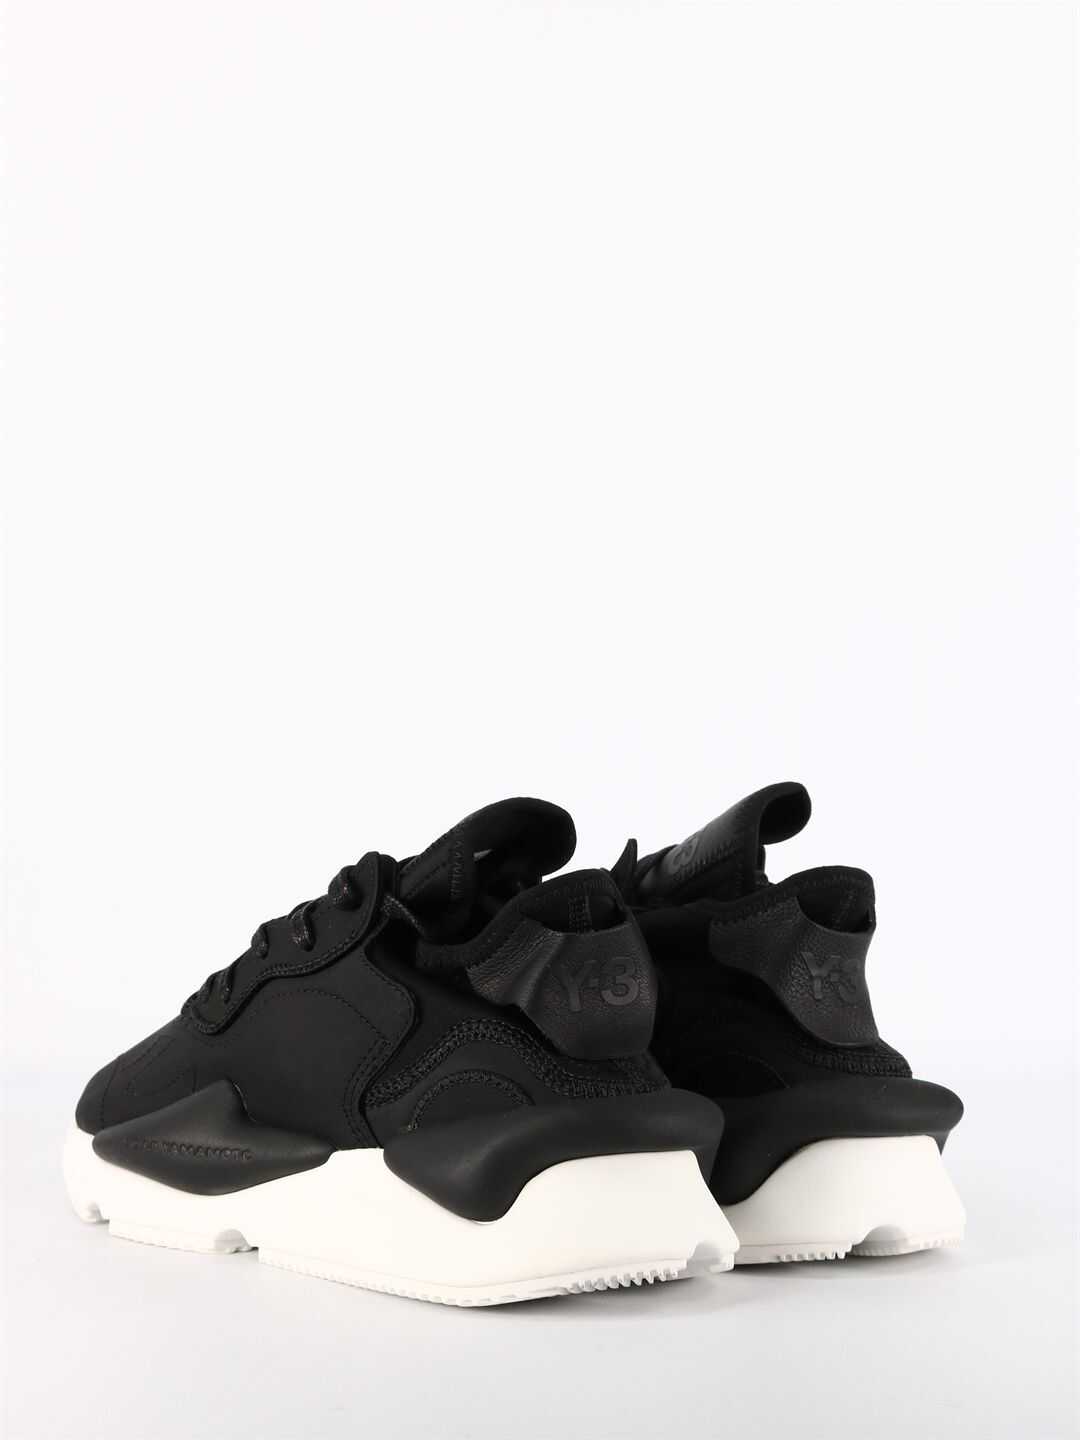 adidas Y-3 by Yohji Yamamoto Sneakers Black/white